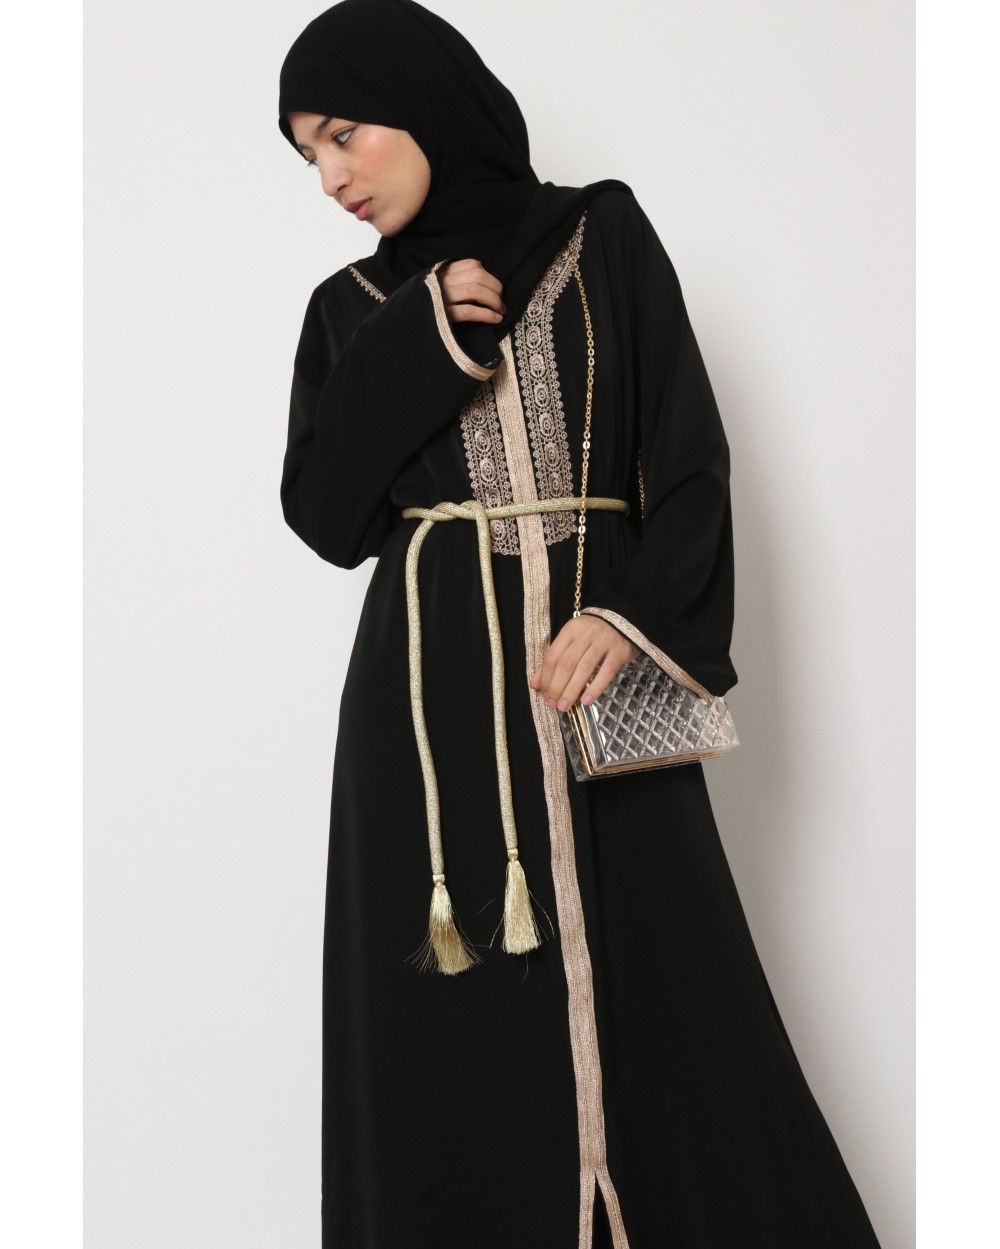 Robe longue Abaya broderie chic orientale